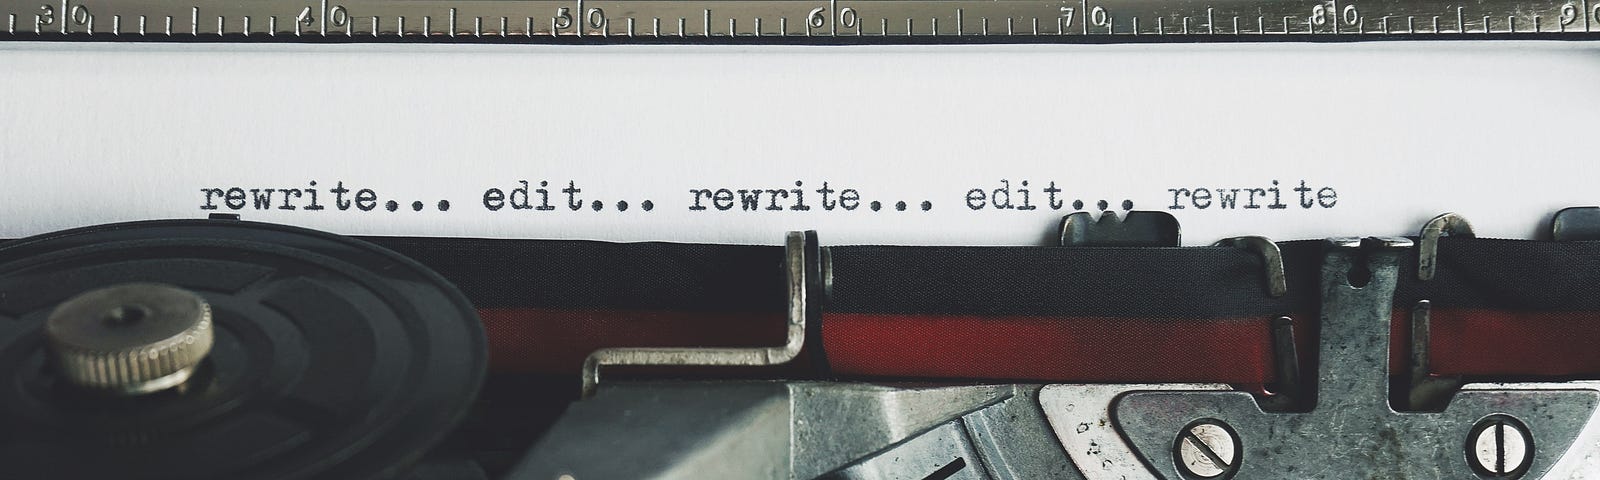 Rewrite edit text on a typewriter